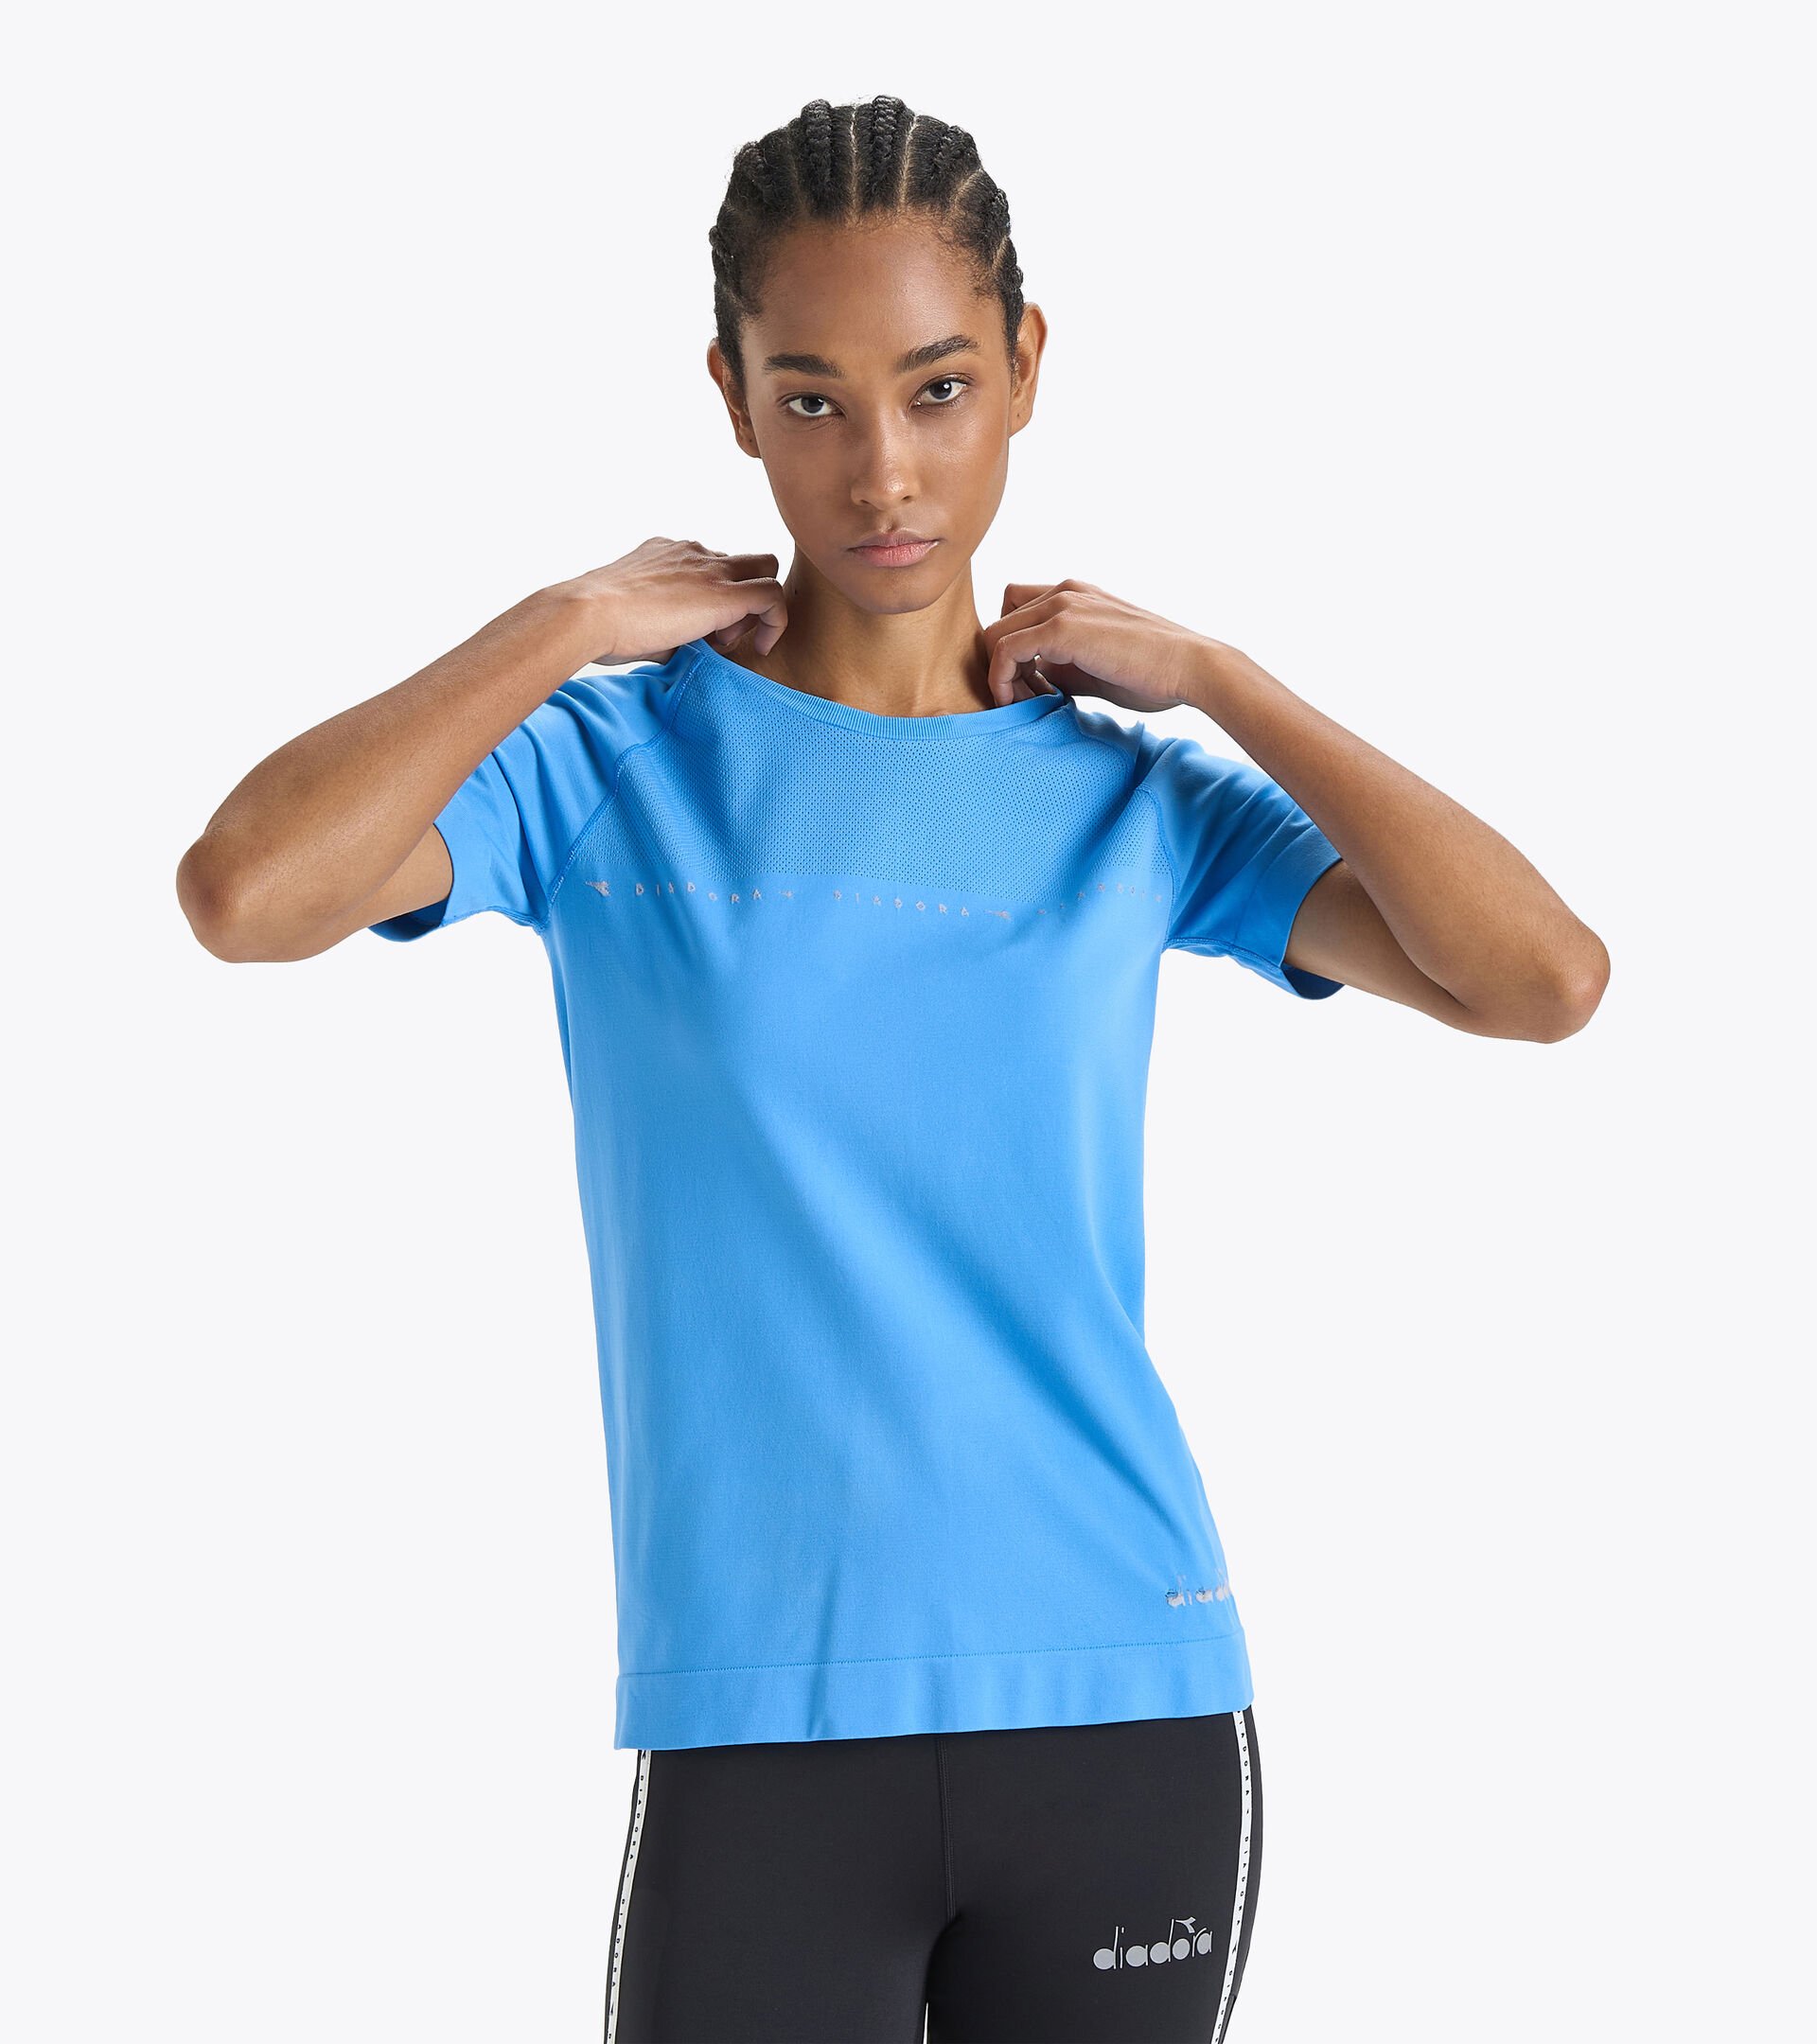 Made in Italy running t-shirt - Women  L. SS SKIN FRIENDLY T-SHIRT BONNIE SKY-BLUE - Diadora